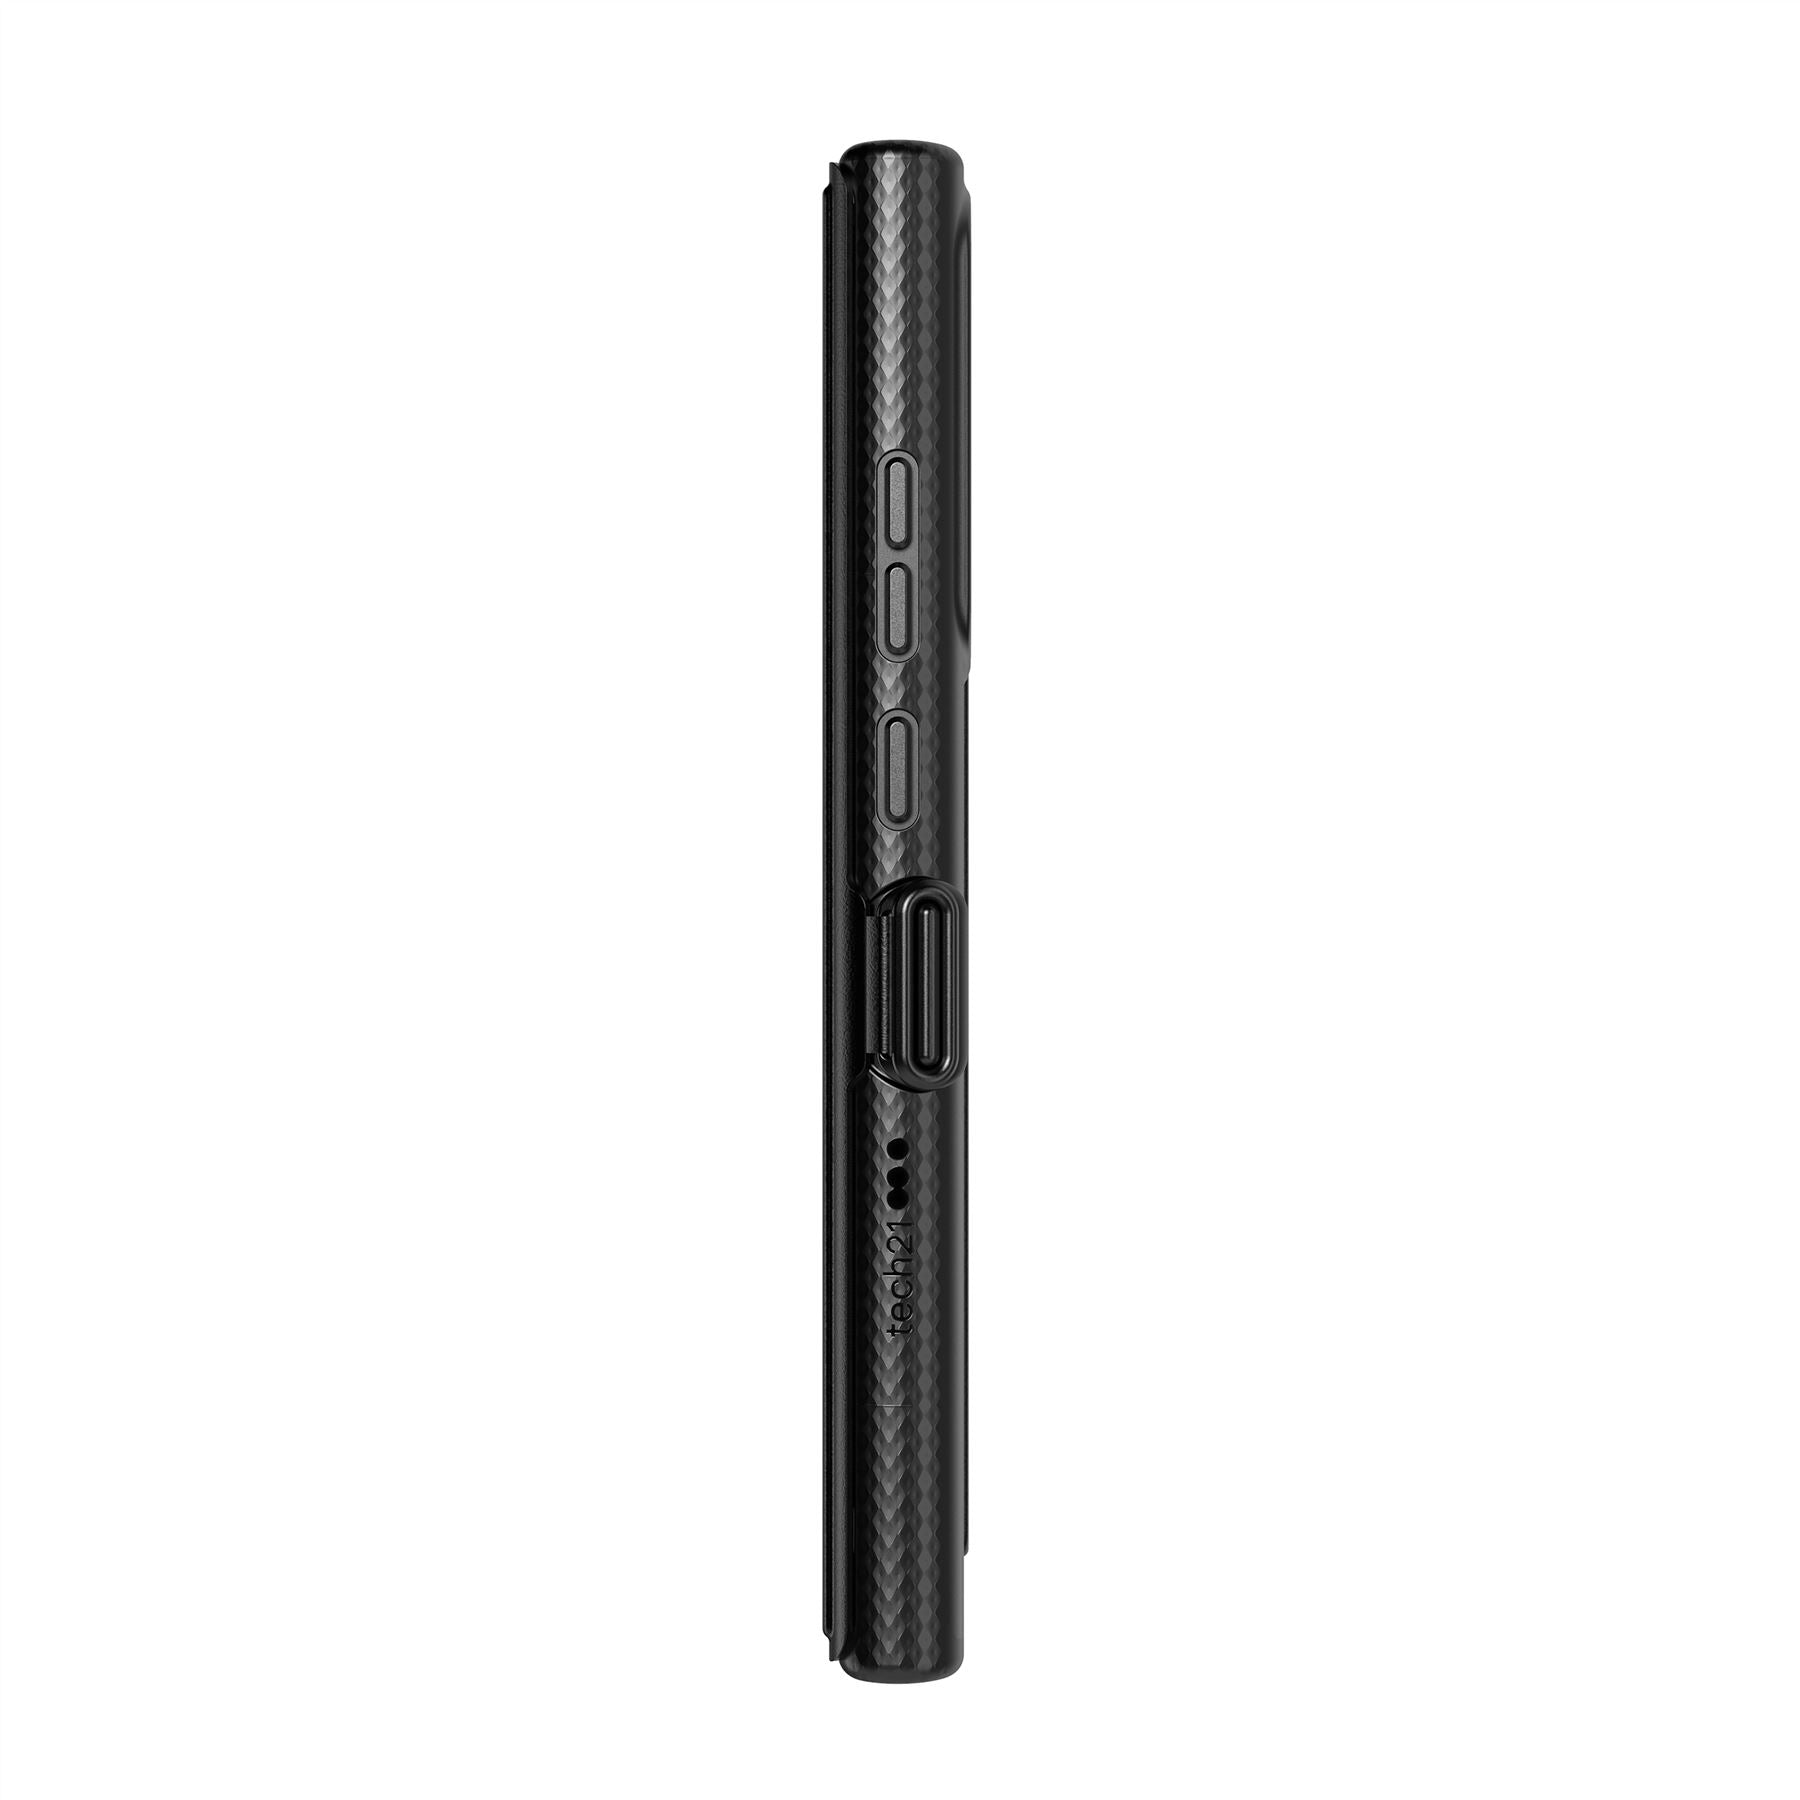 Evo Wallet - Samsung Galaxy Note20 Ultra Case - Black